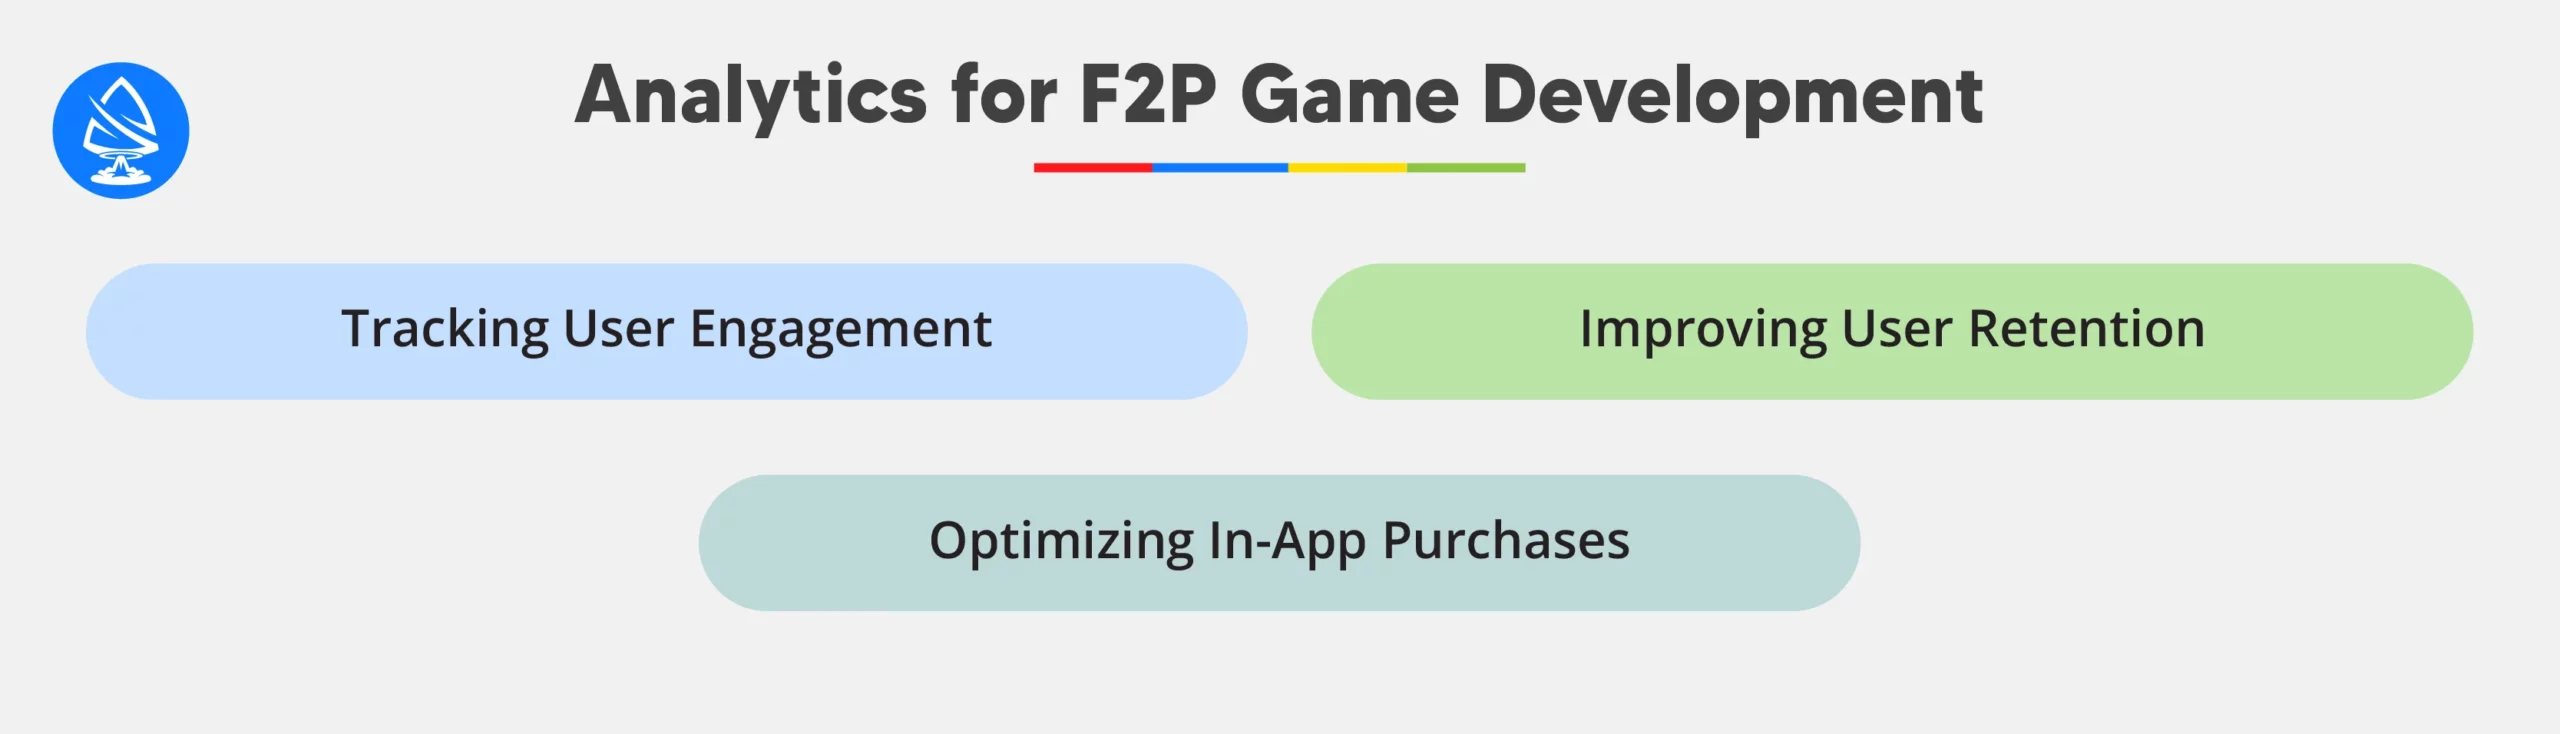 Leveraging Analytics for F2P Game Development